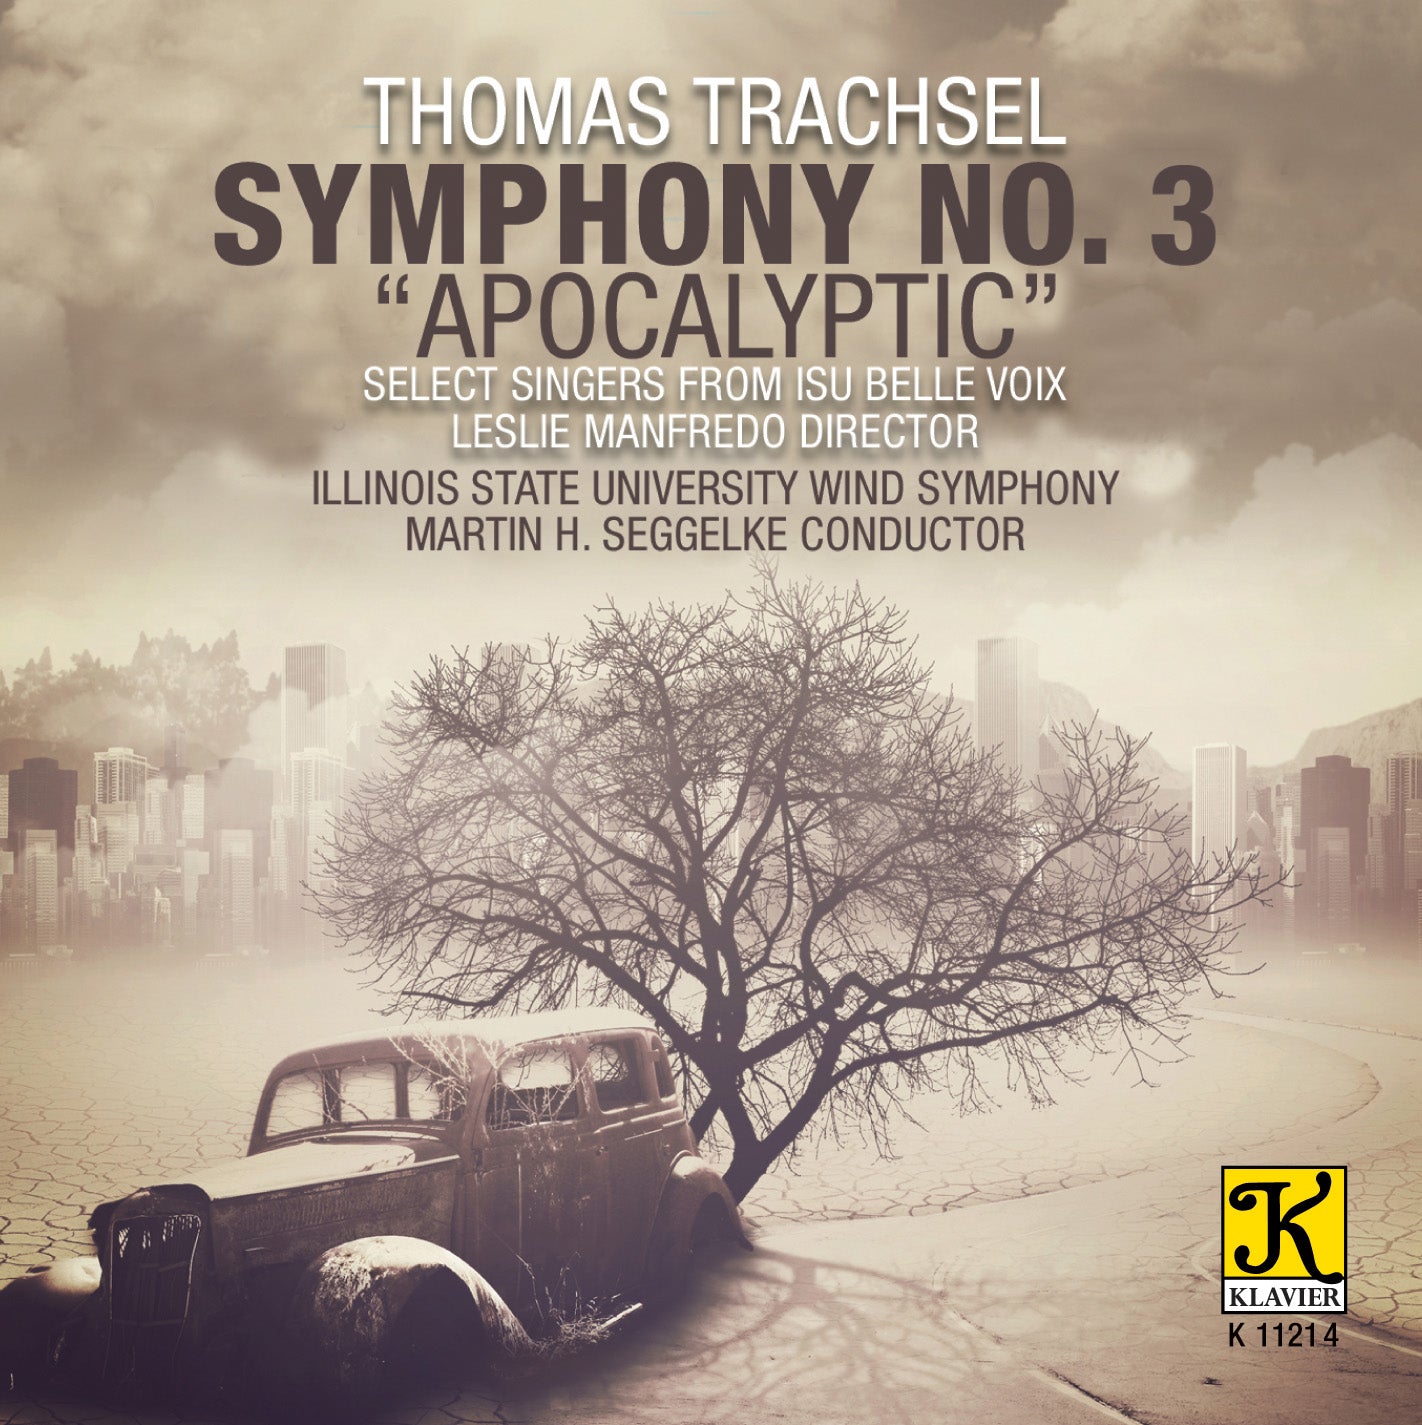 Thomas Trachsel: Symphony No. 3 "Apocalyptic"